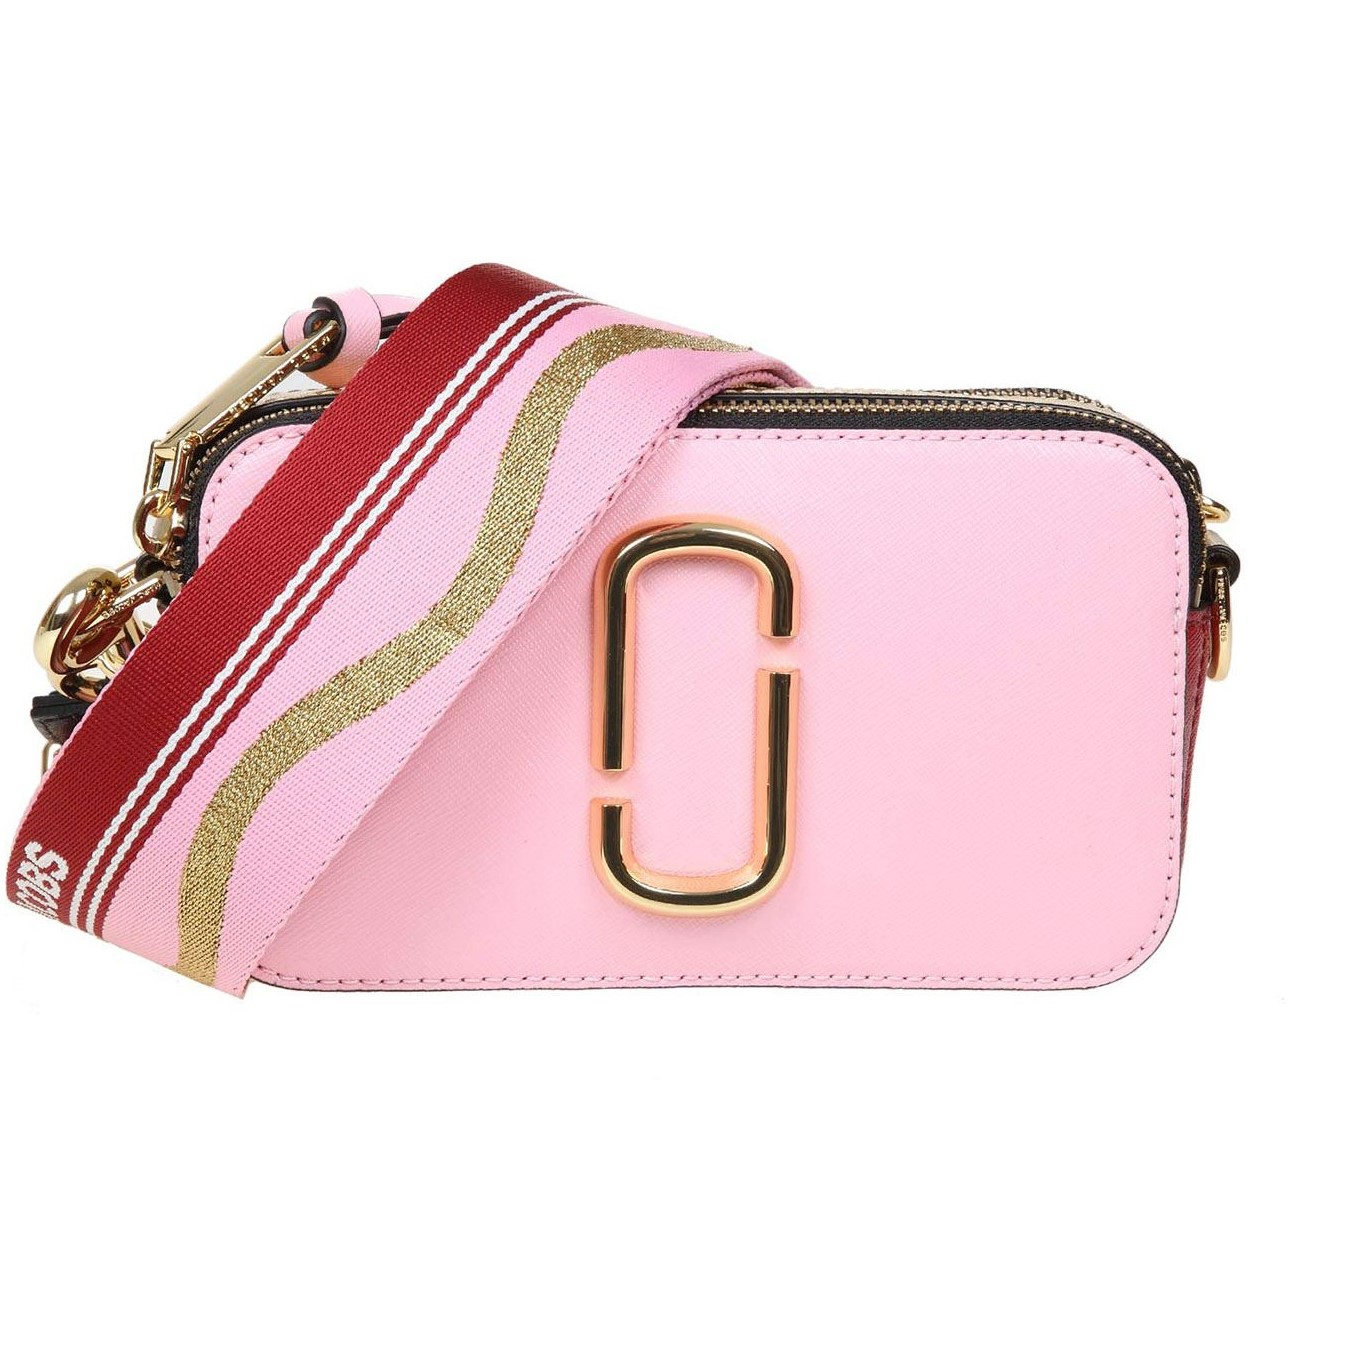 Túi xách nữ Marc Jacobs màu hồng | The Snapshot bag in New Baby Pink color 6